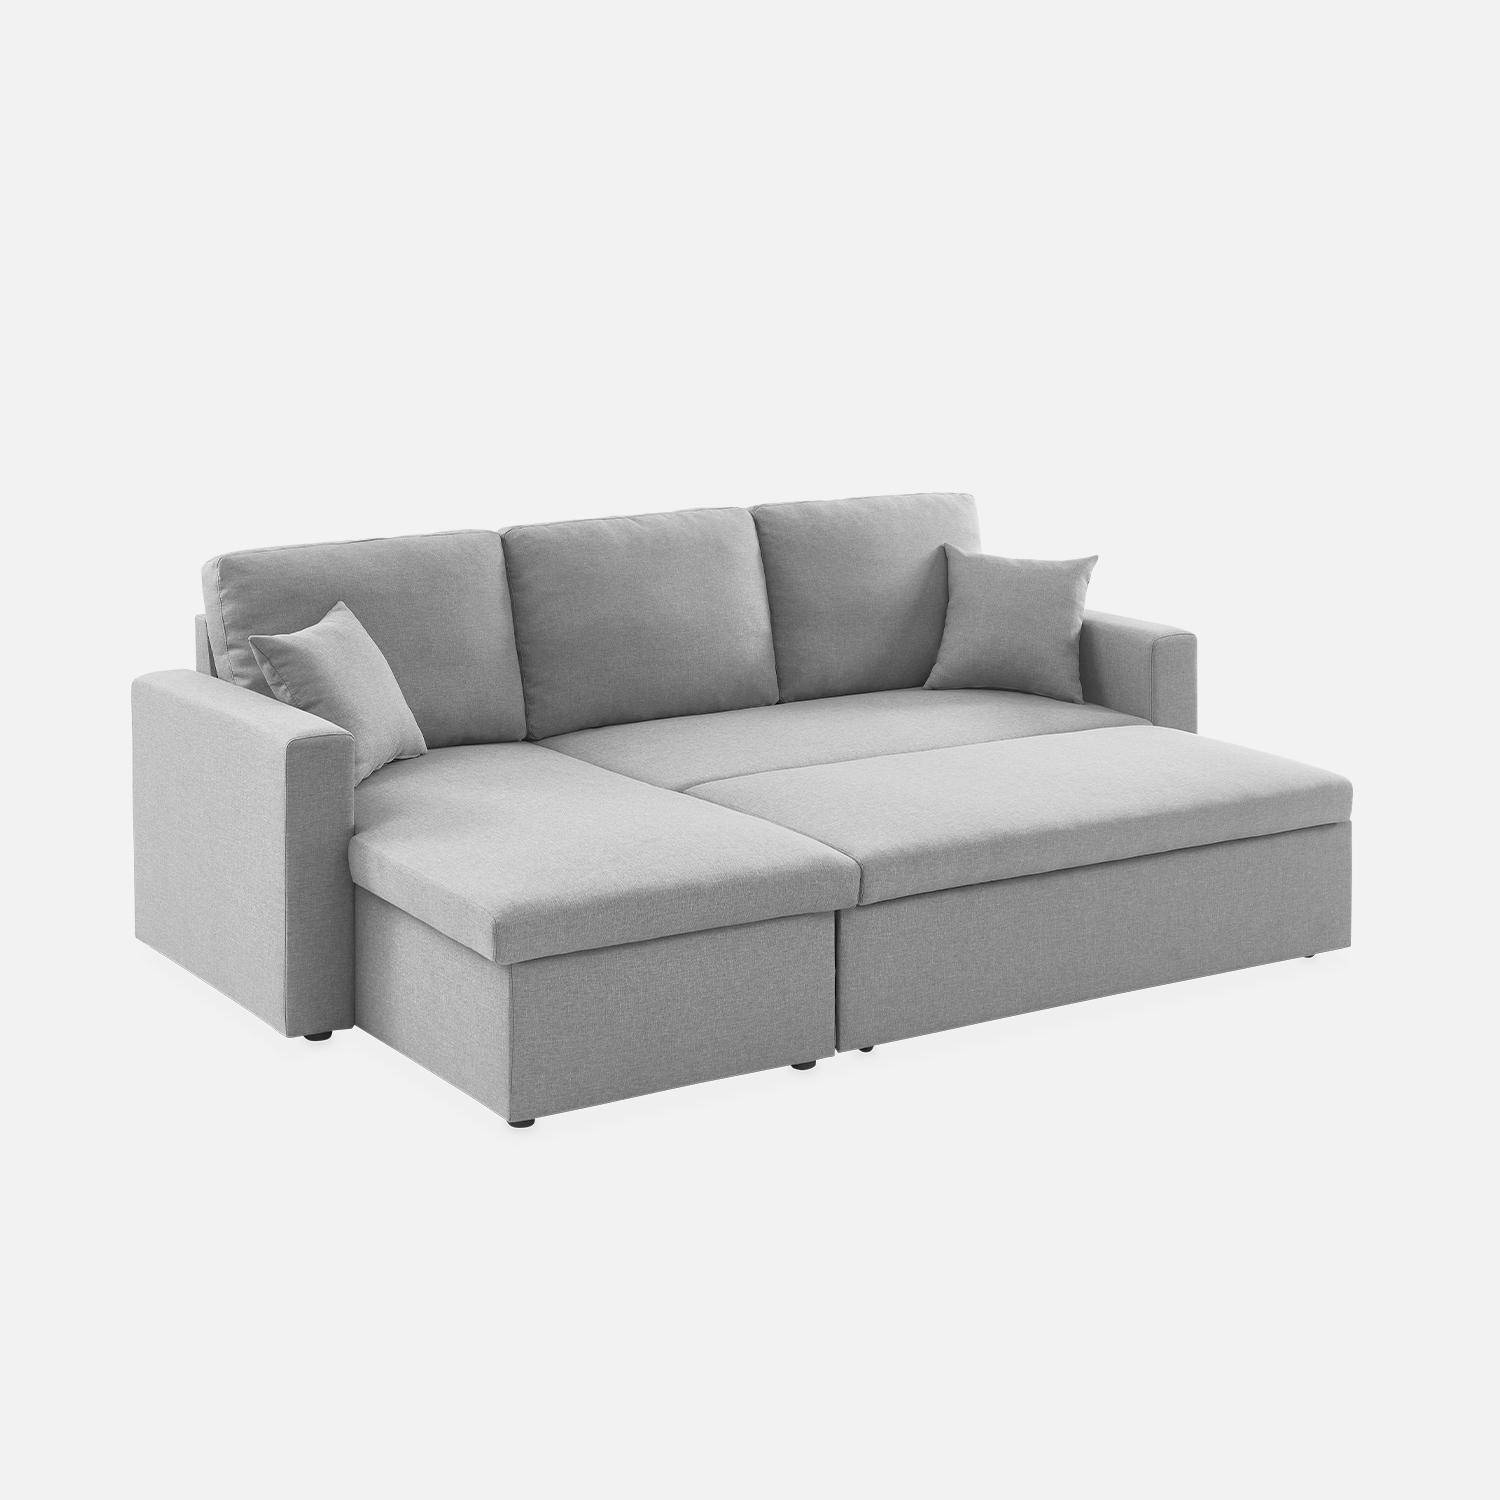 Stoffen lichtgrijze bedbank met chaise longue en opbergruimte - IDA - 3-zits, omkeerbare hoeksalon, opbergruimte, zetelbed Photo9